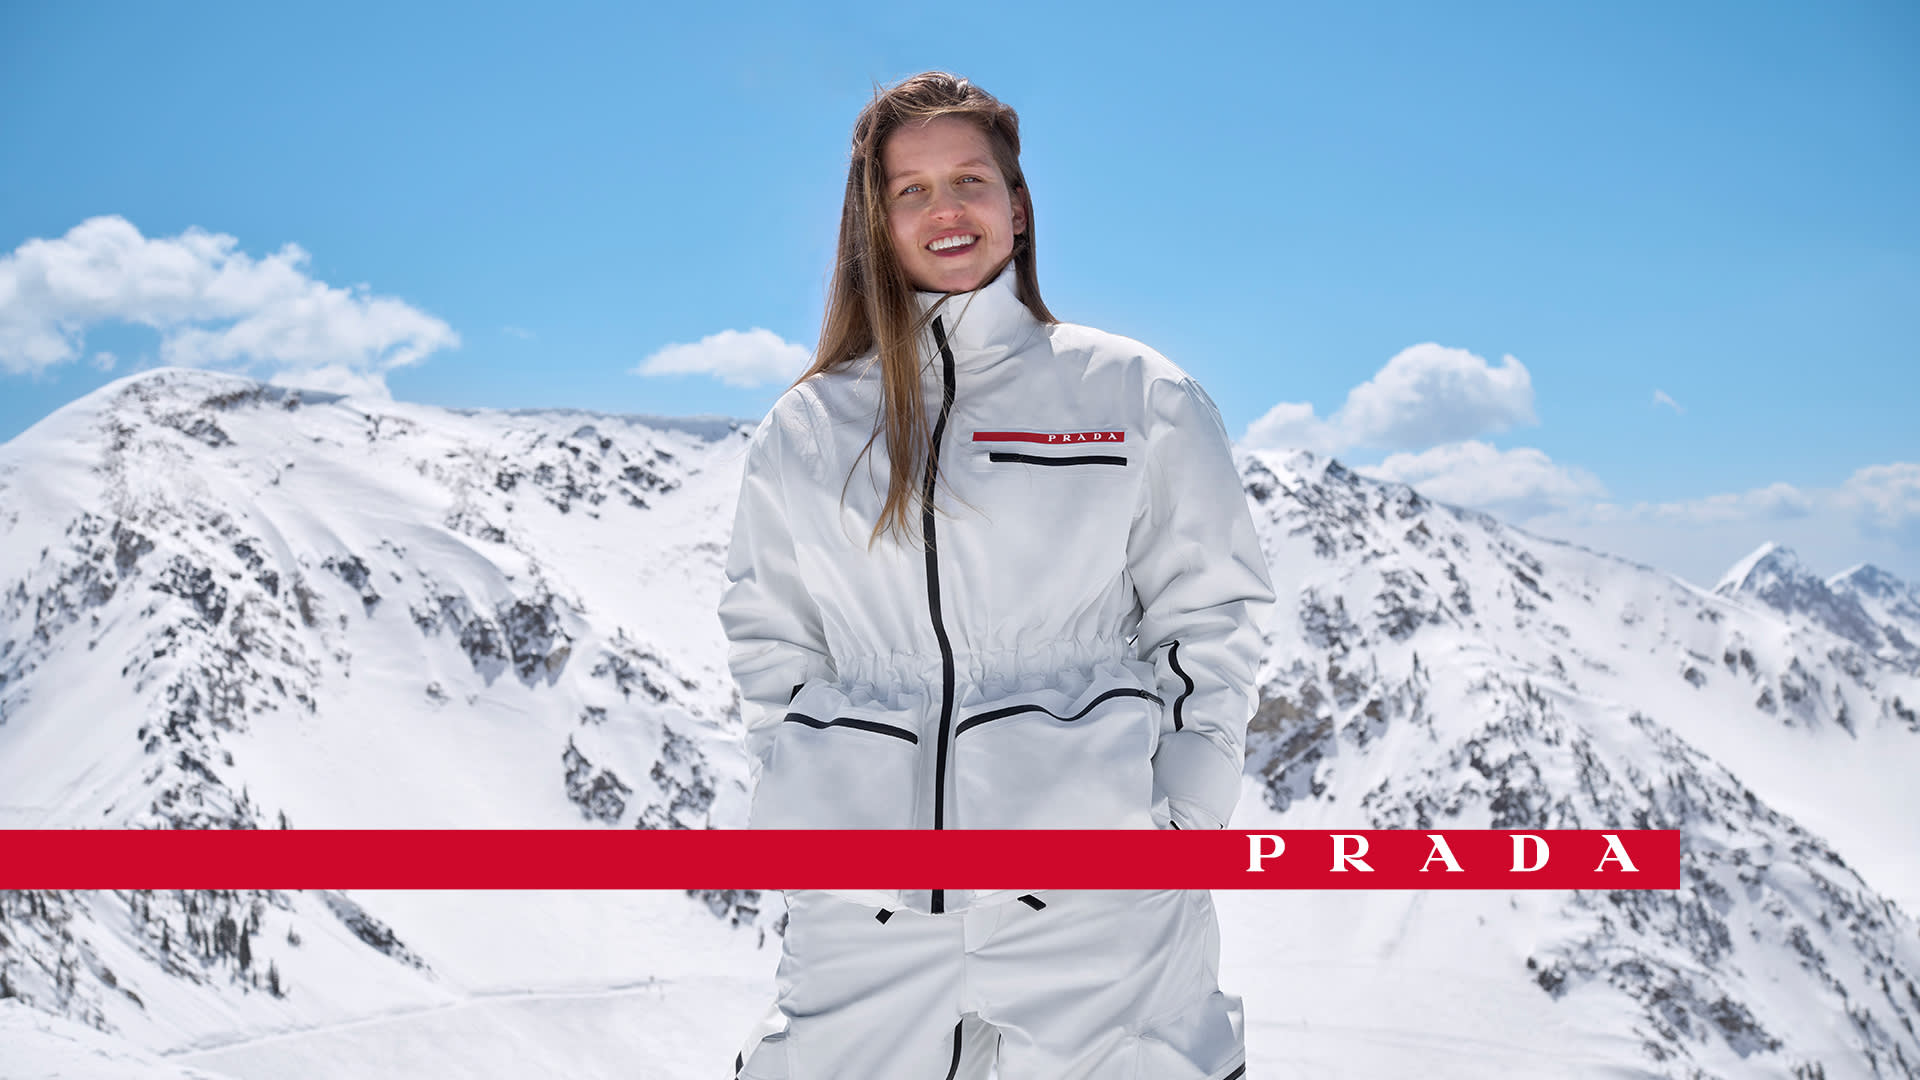 Prada Ski Campaign Julia Marino